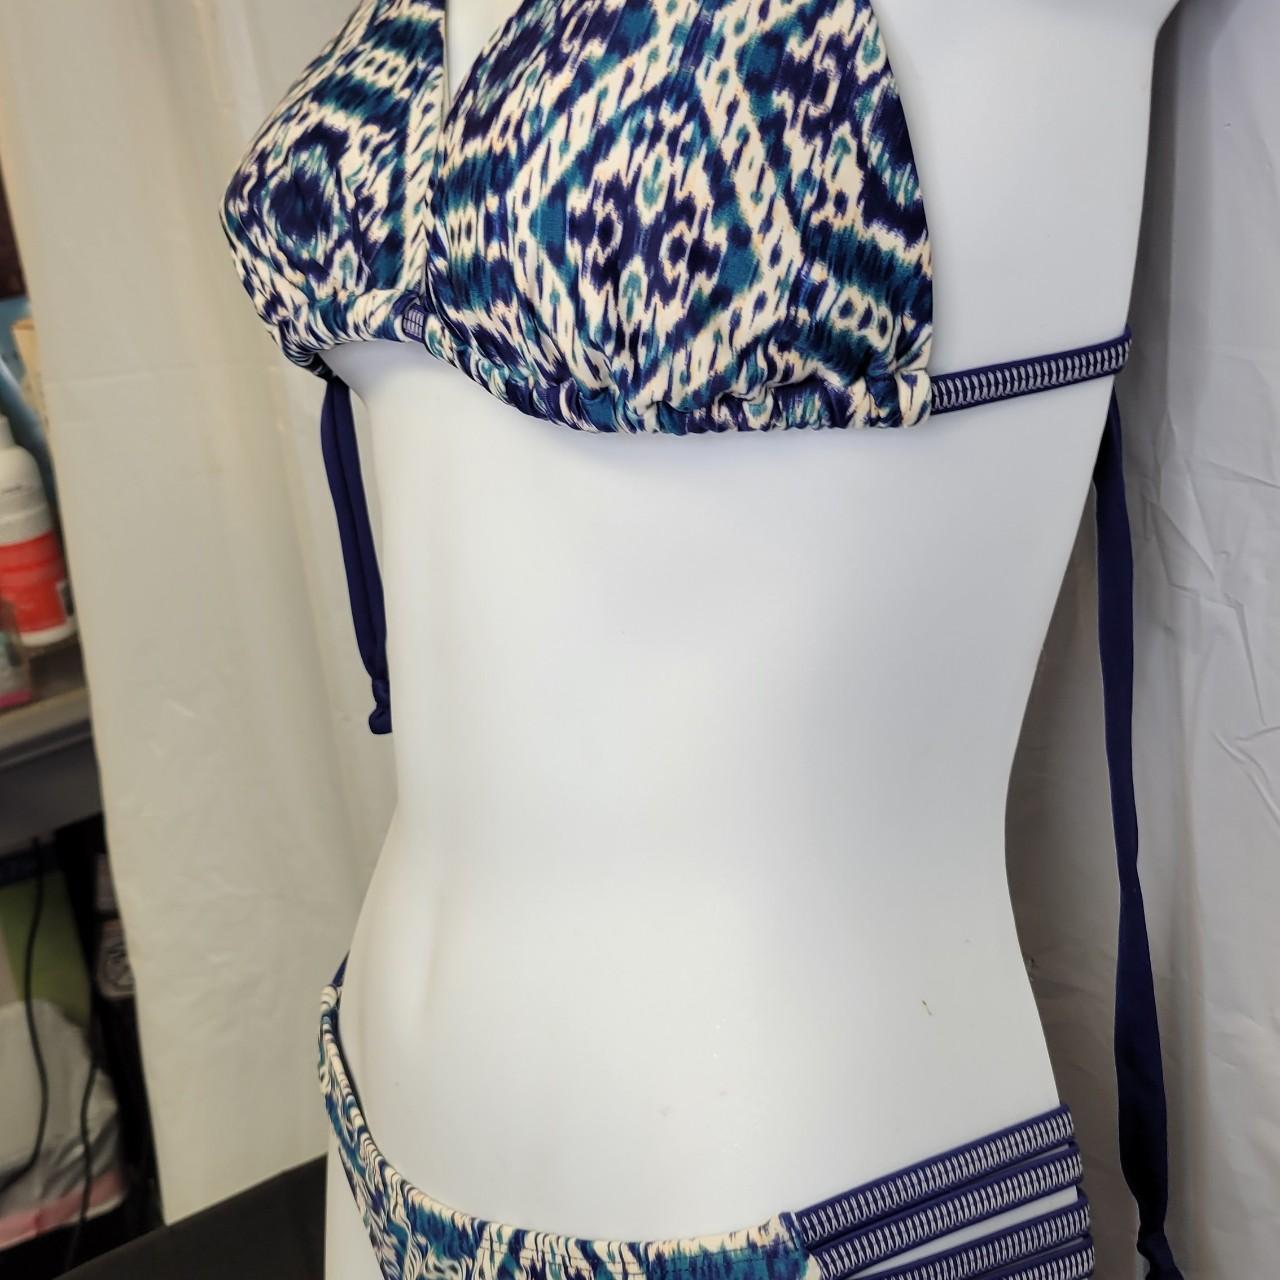 Body Glove Women's White and Blue Bikinis-and-tankini-sets (4)